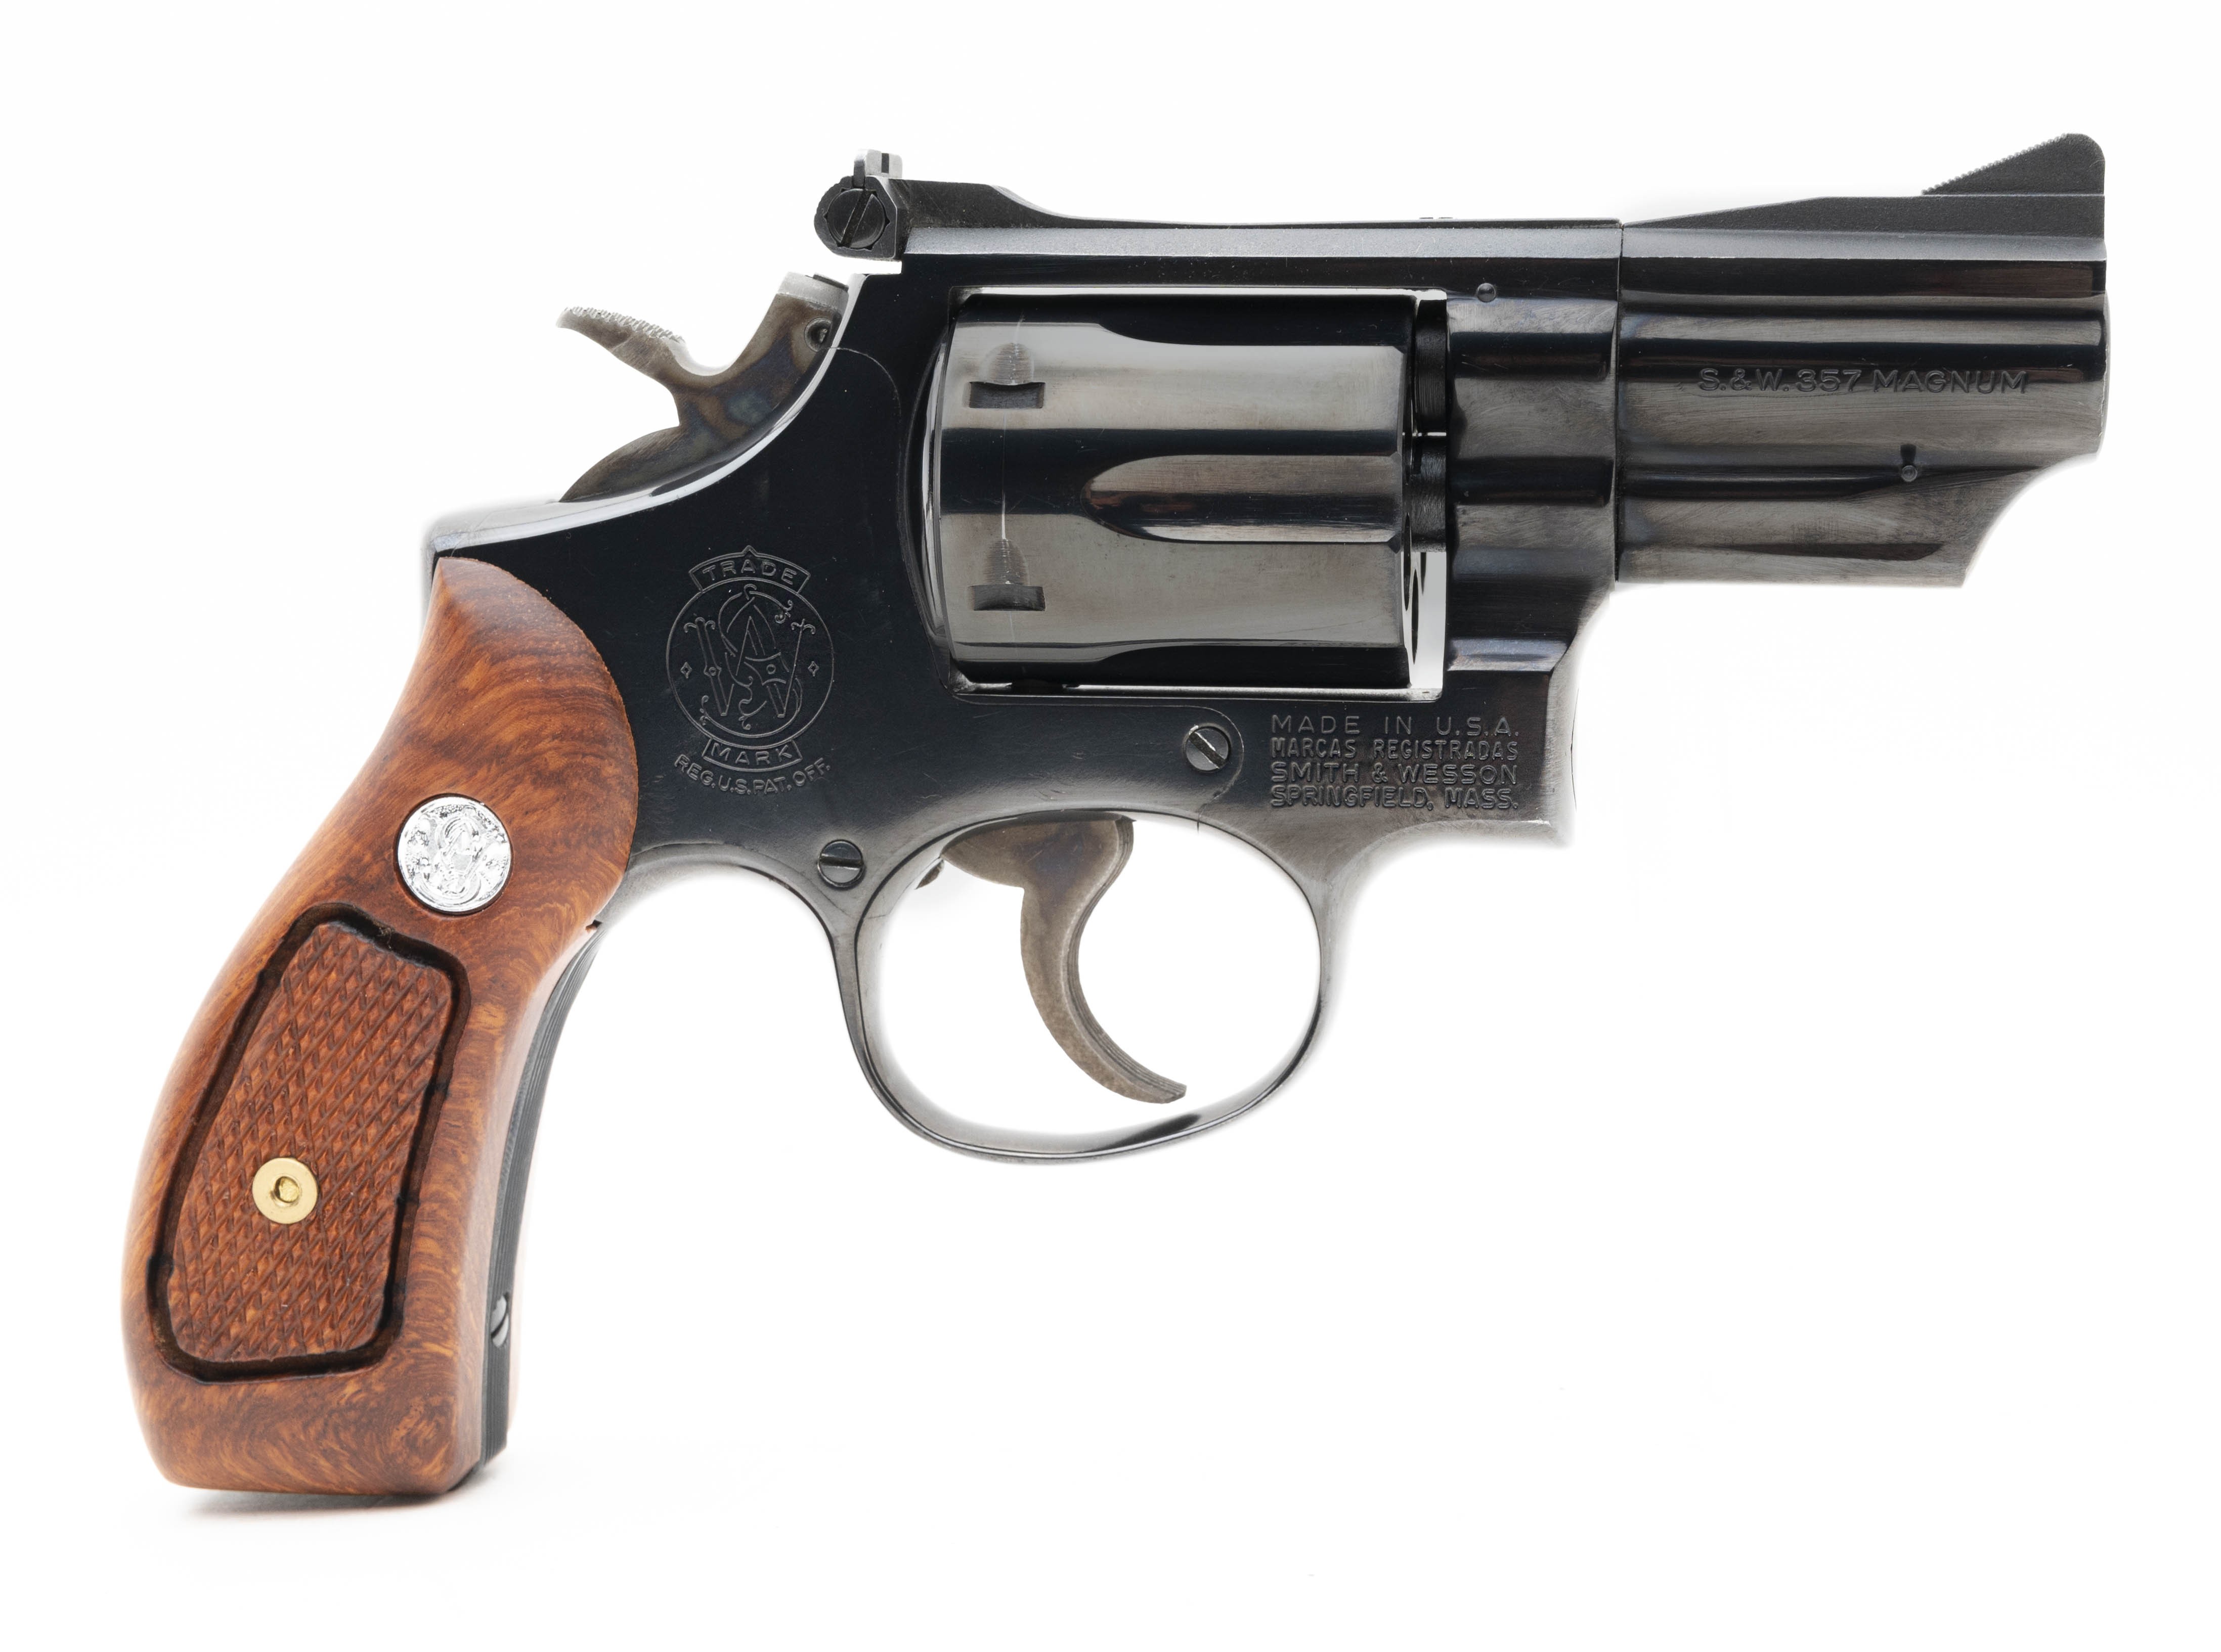 Smith & Wesson 19-3 .357 Magnum caliber revolver for sale.